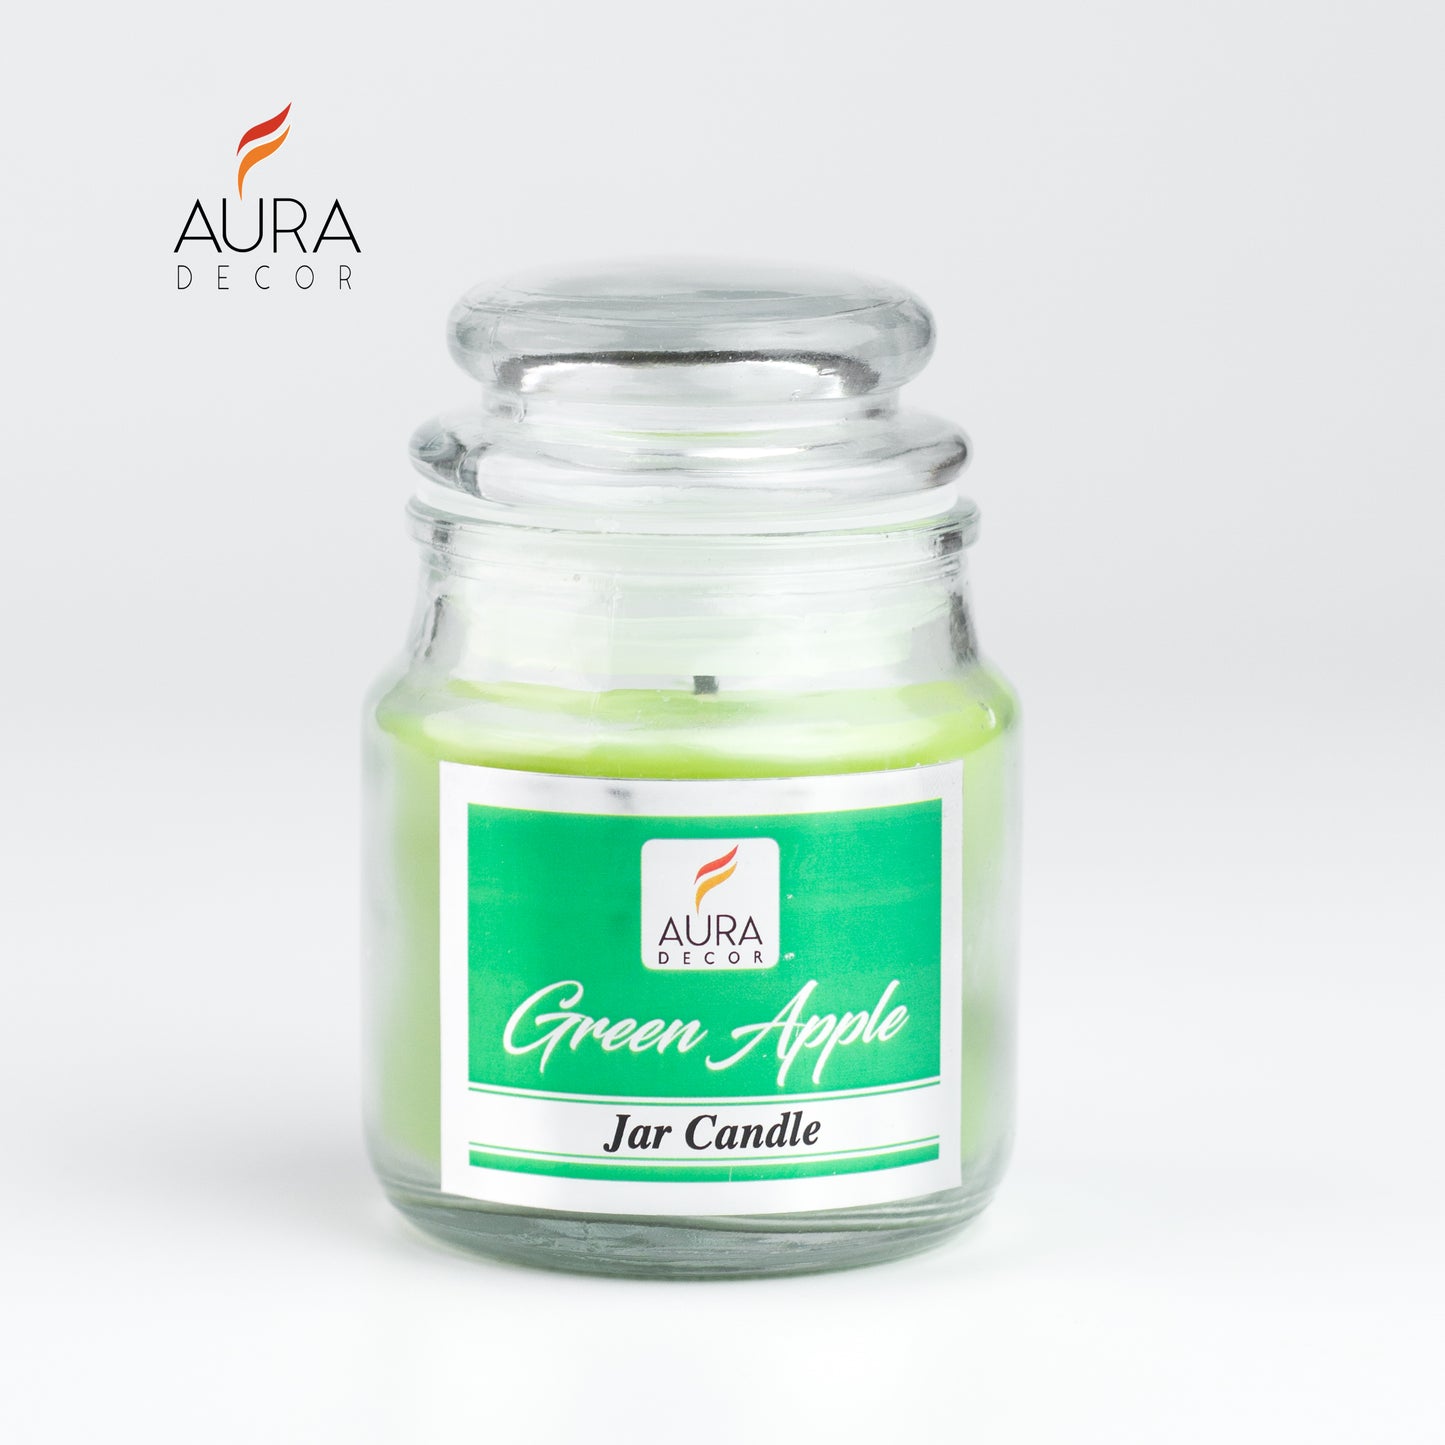 AuraDecor Green Apple Fragrance Jar Candle Burning Time 30 hours